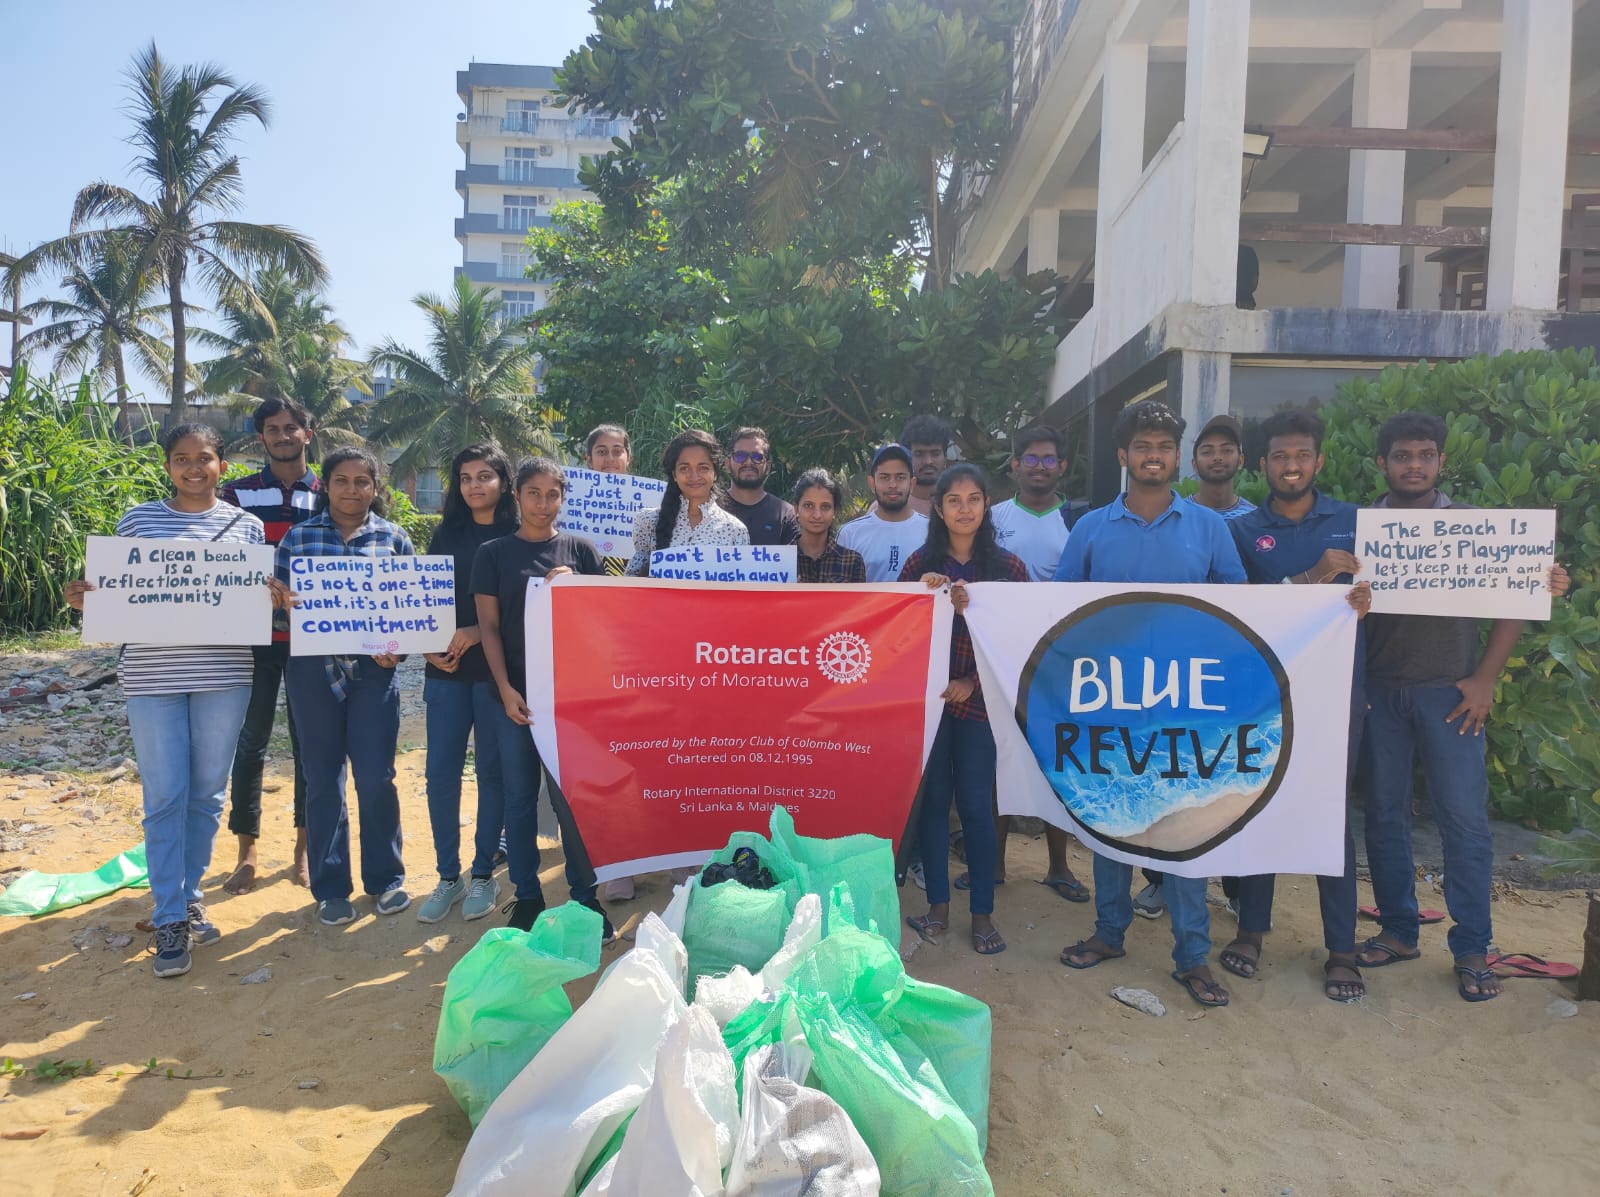 Blue Revive: Making Waves for a Cleaner Coastal Line